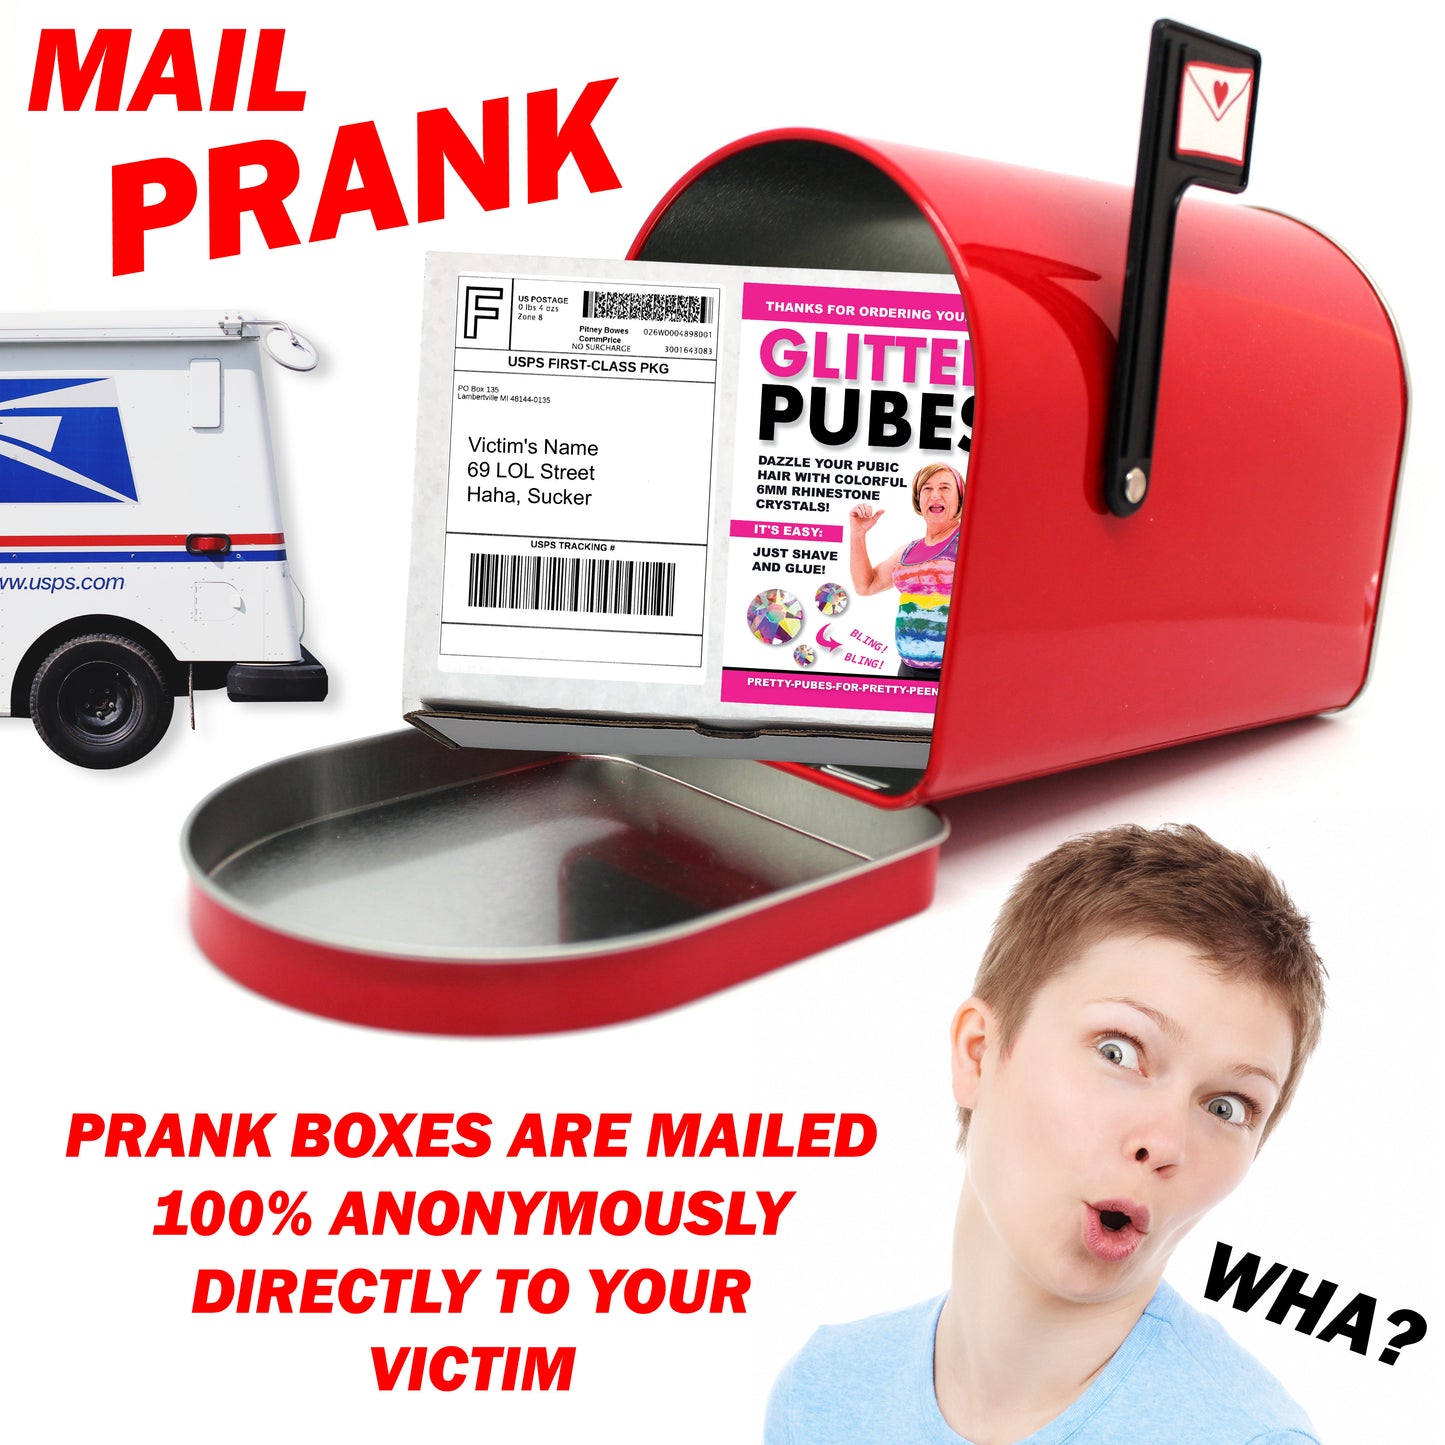 Glitter Pubes Prank Mail